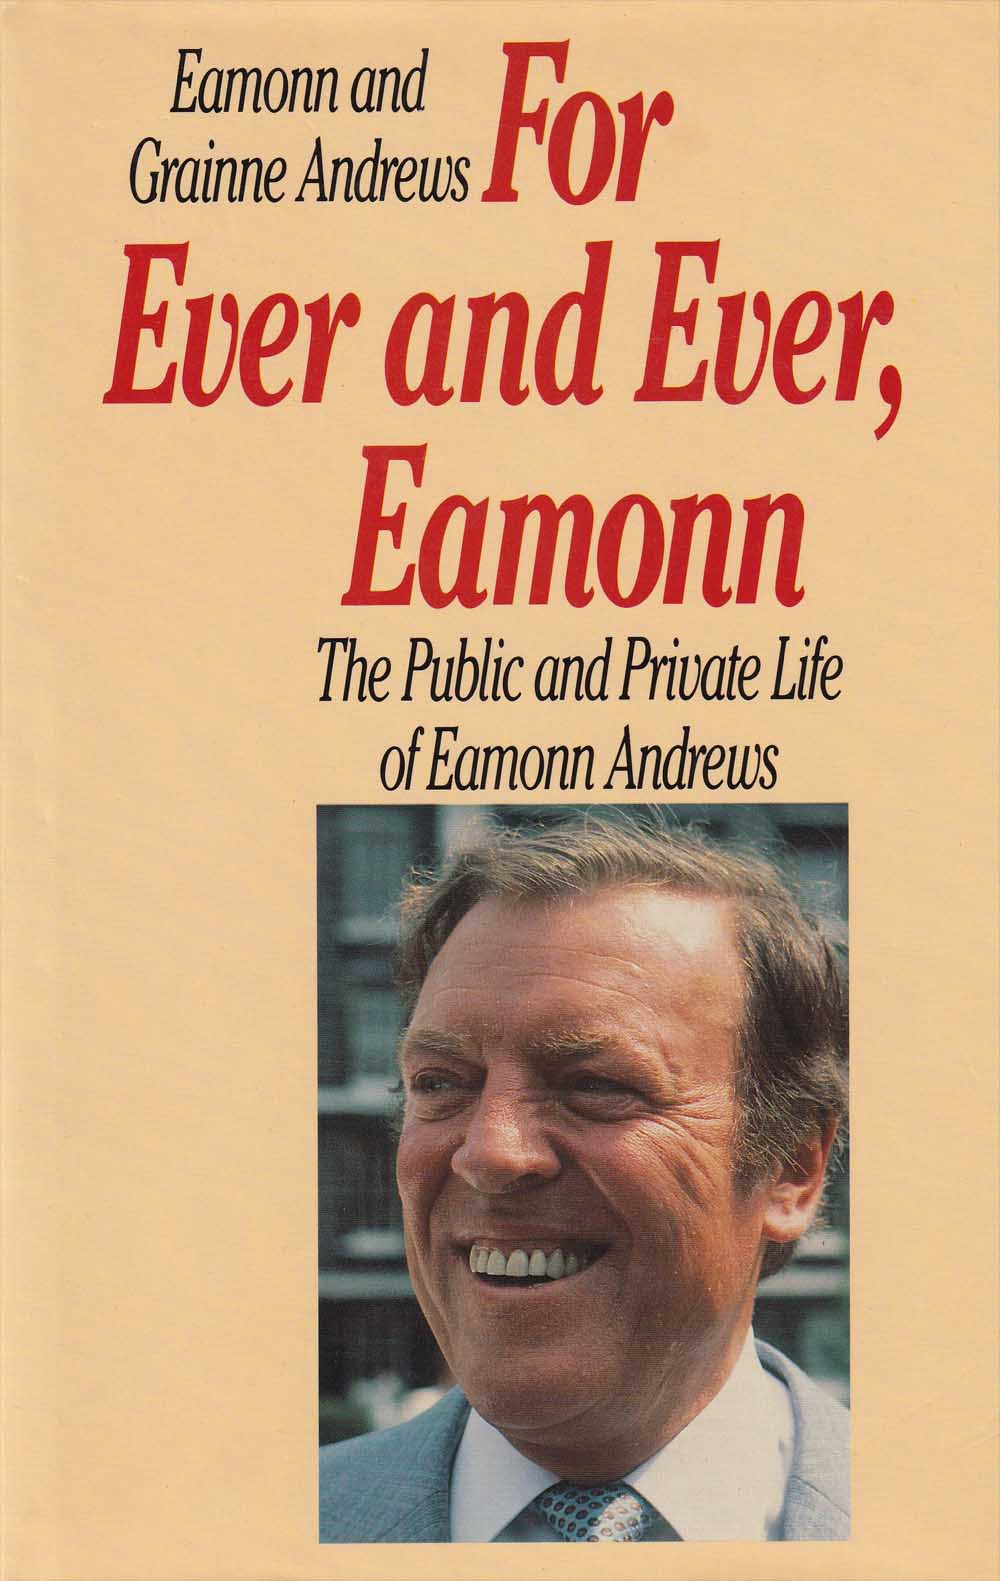 Eamonn Andrews' autobiography